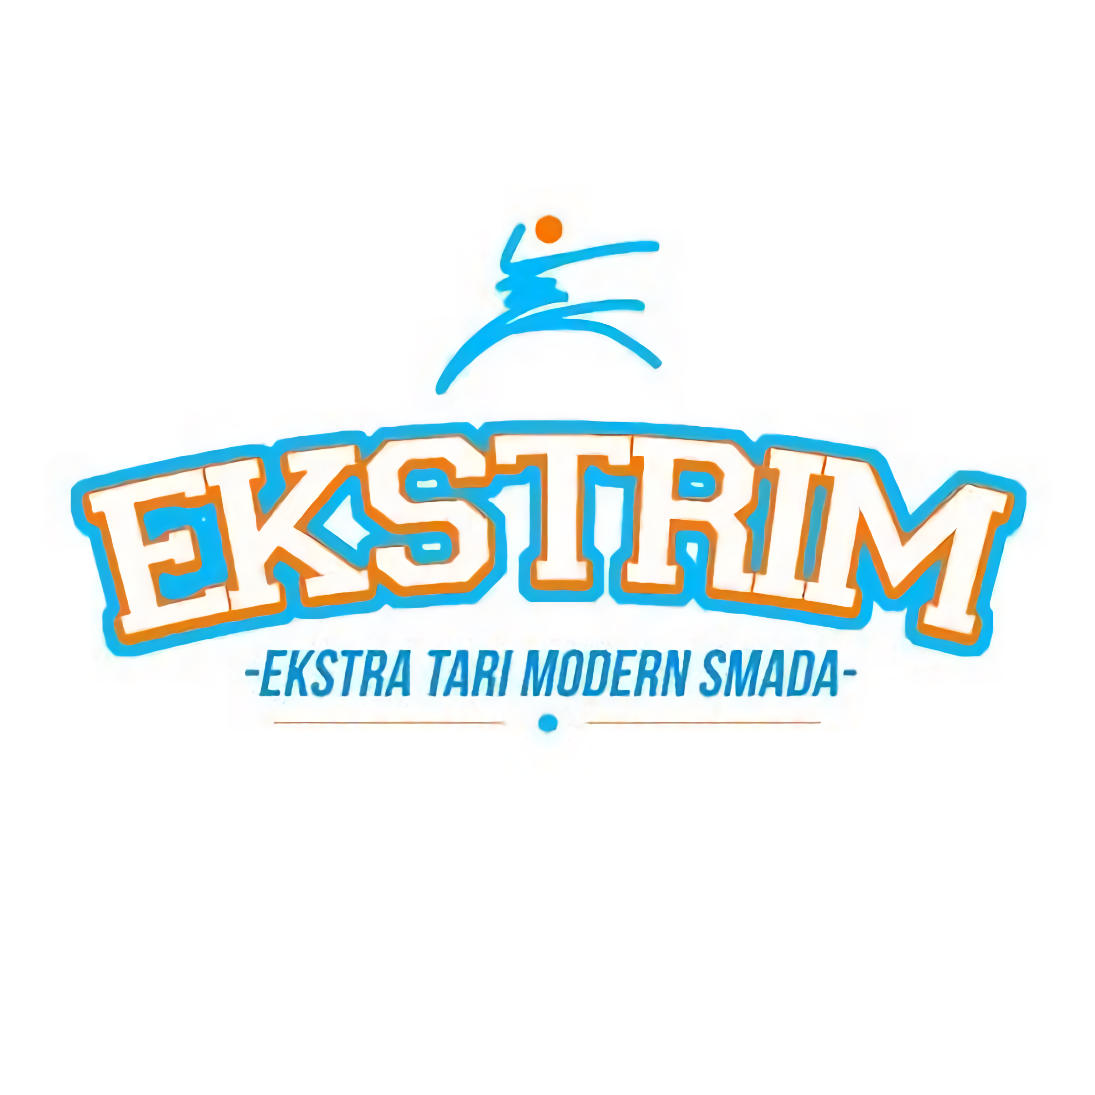 ekstrim